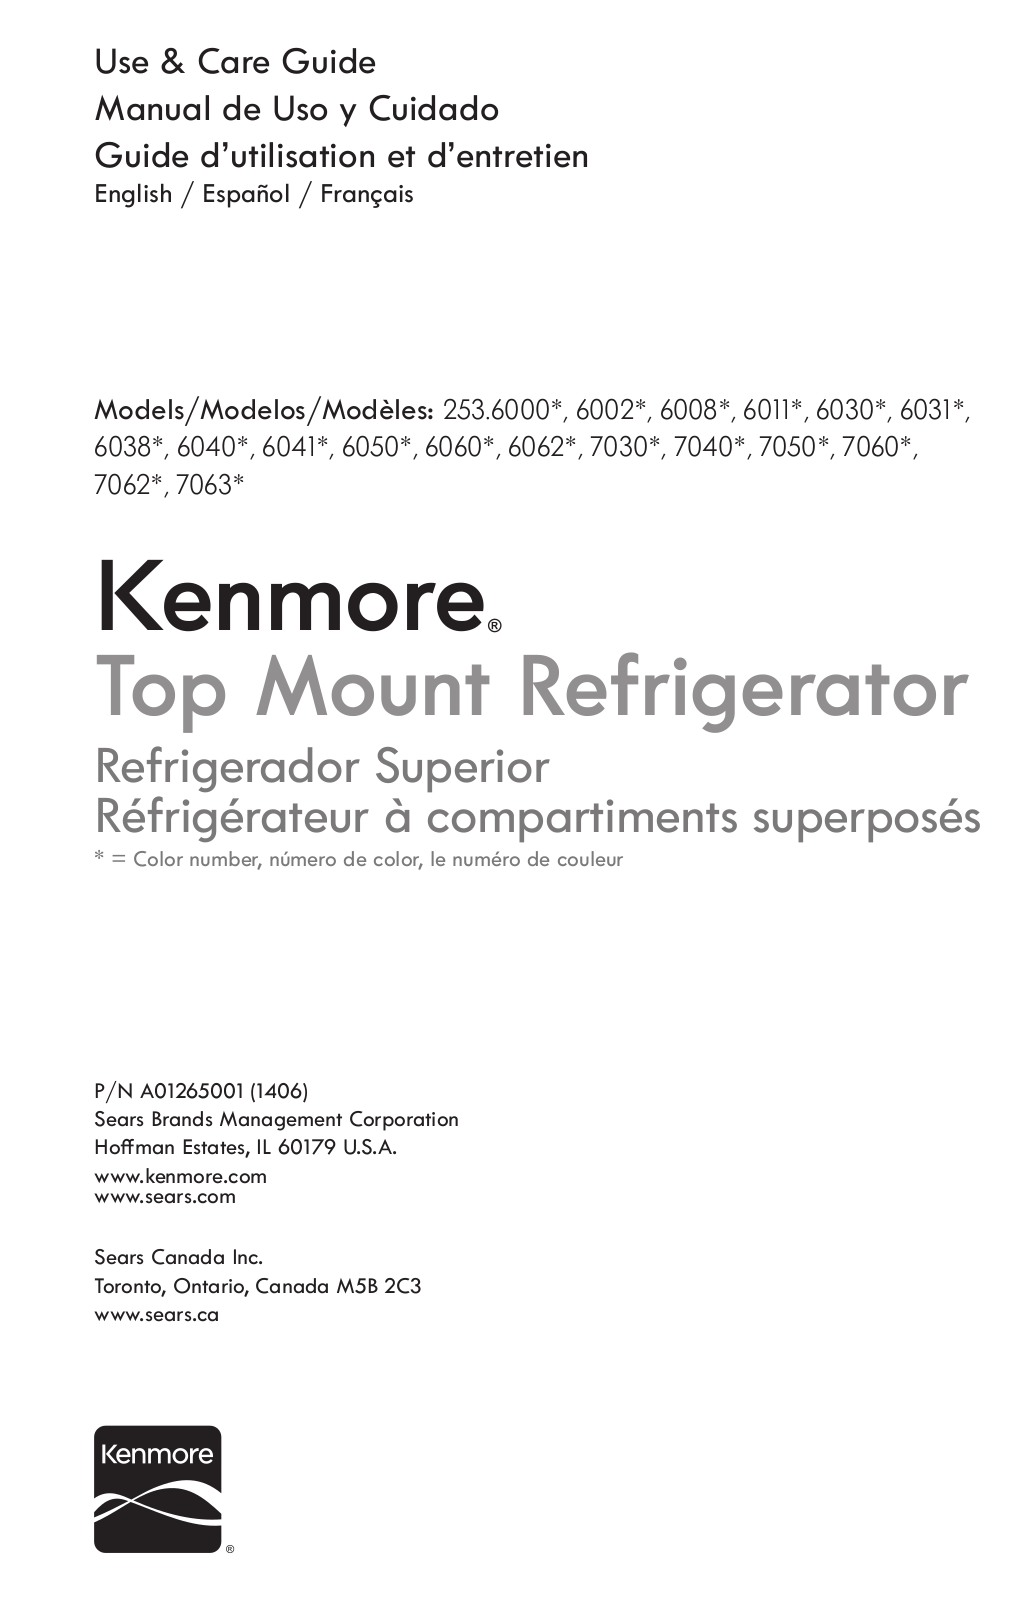 Kenmore 18 cu. ft. Top Mount Refrigerator, 18 cu. ft. Top Freezer Refrigerator, 16 cu. ft. Top Freezer Refrigerator, 20.4 cu. ft. Top Freezer Refrigerator, 16.3 cu. ft. Top Freezer Refrigerator Owner's Manual